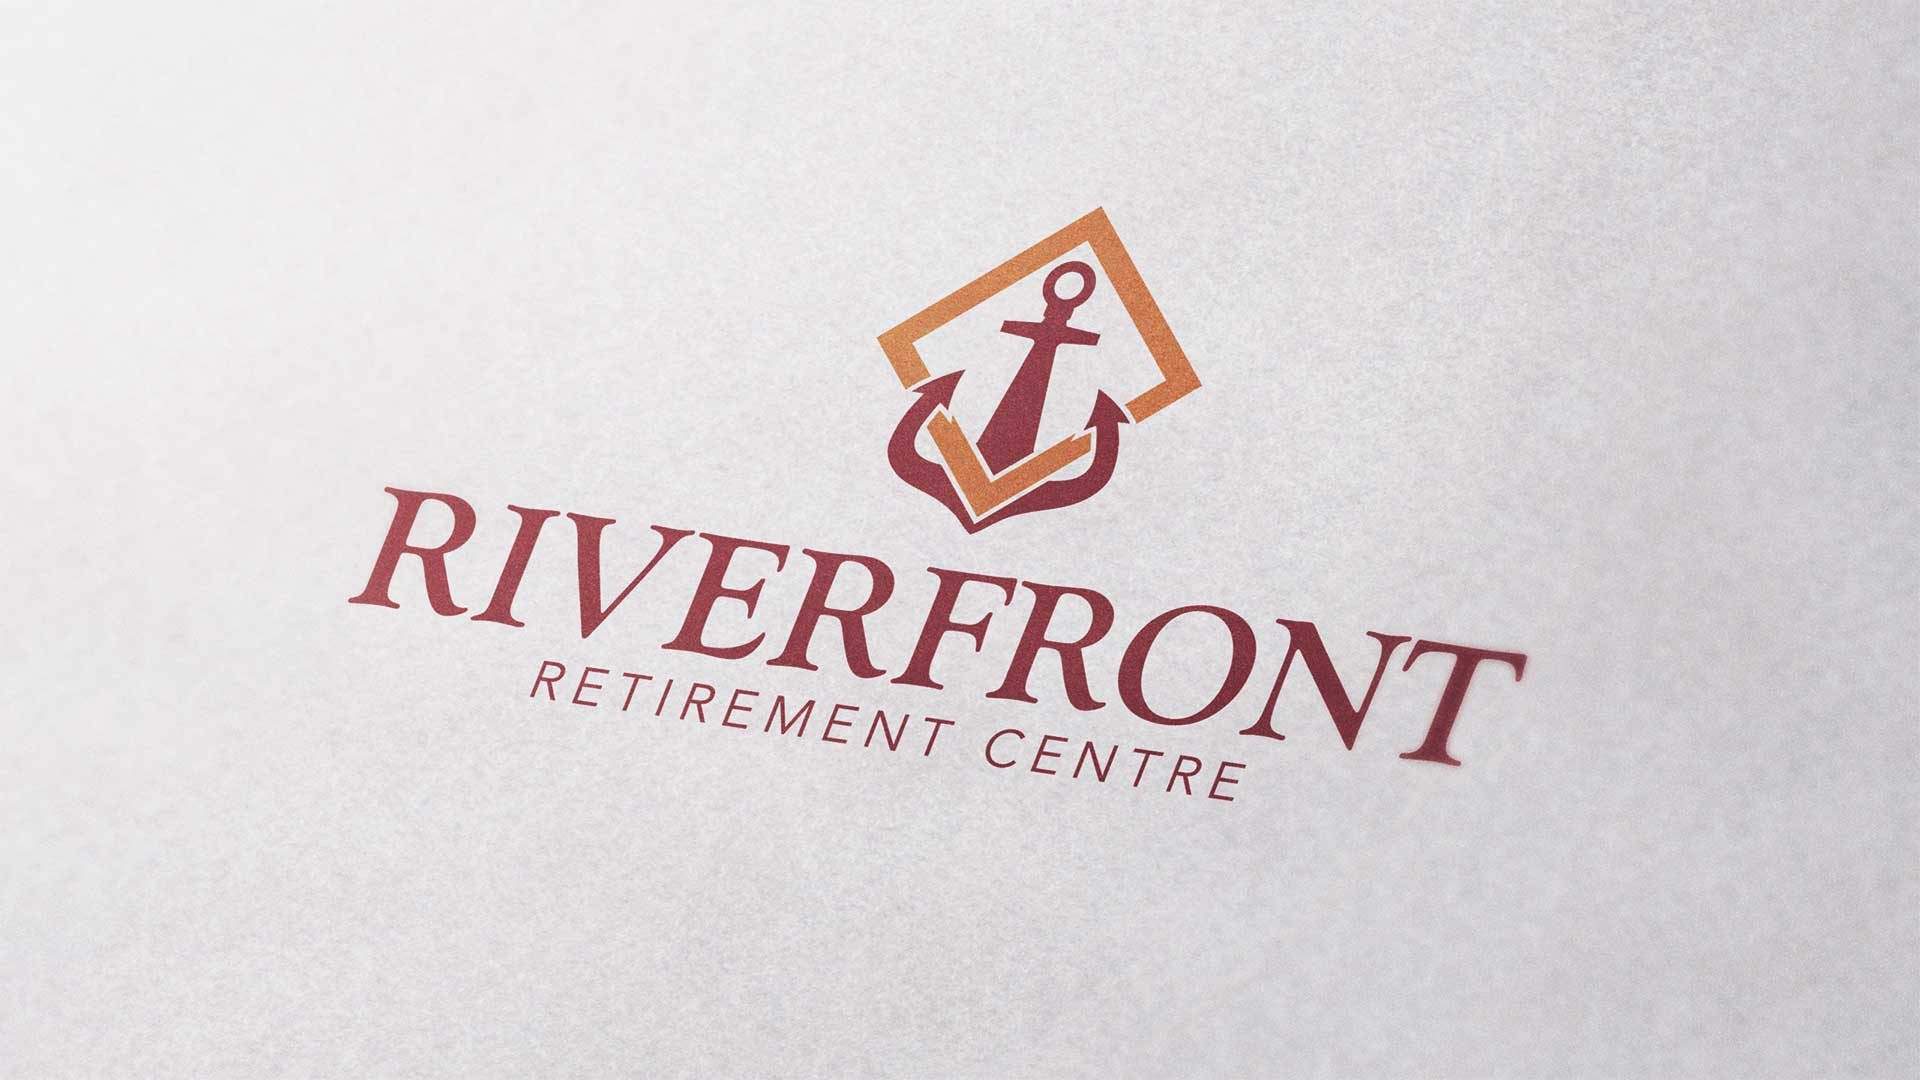 Riverfront Retirement Centre - Design and Branding - Logo